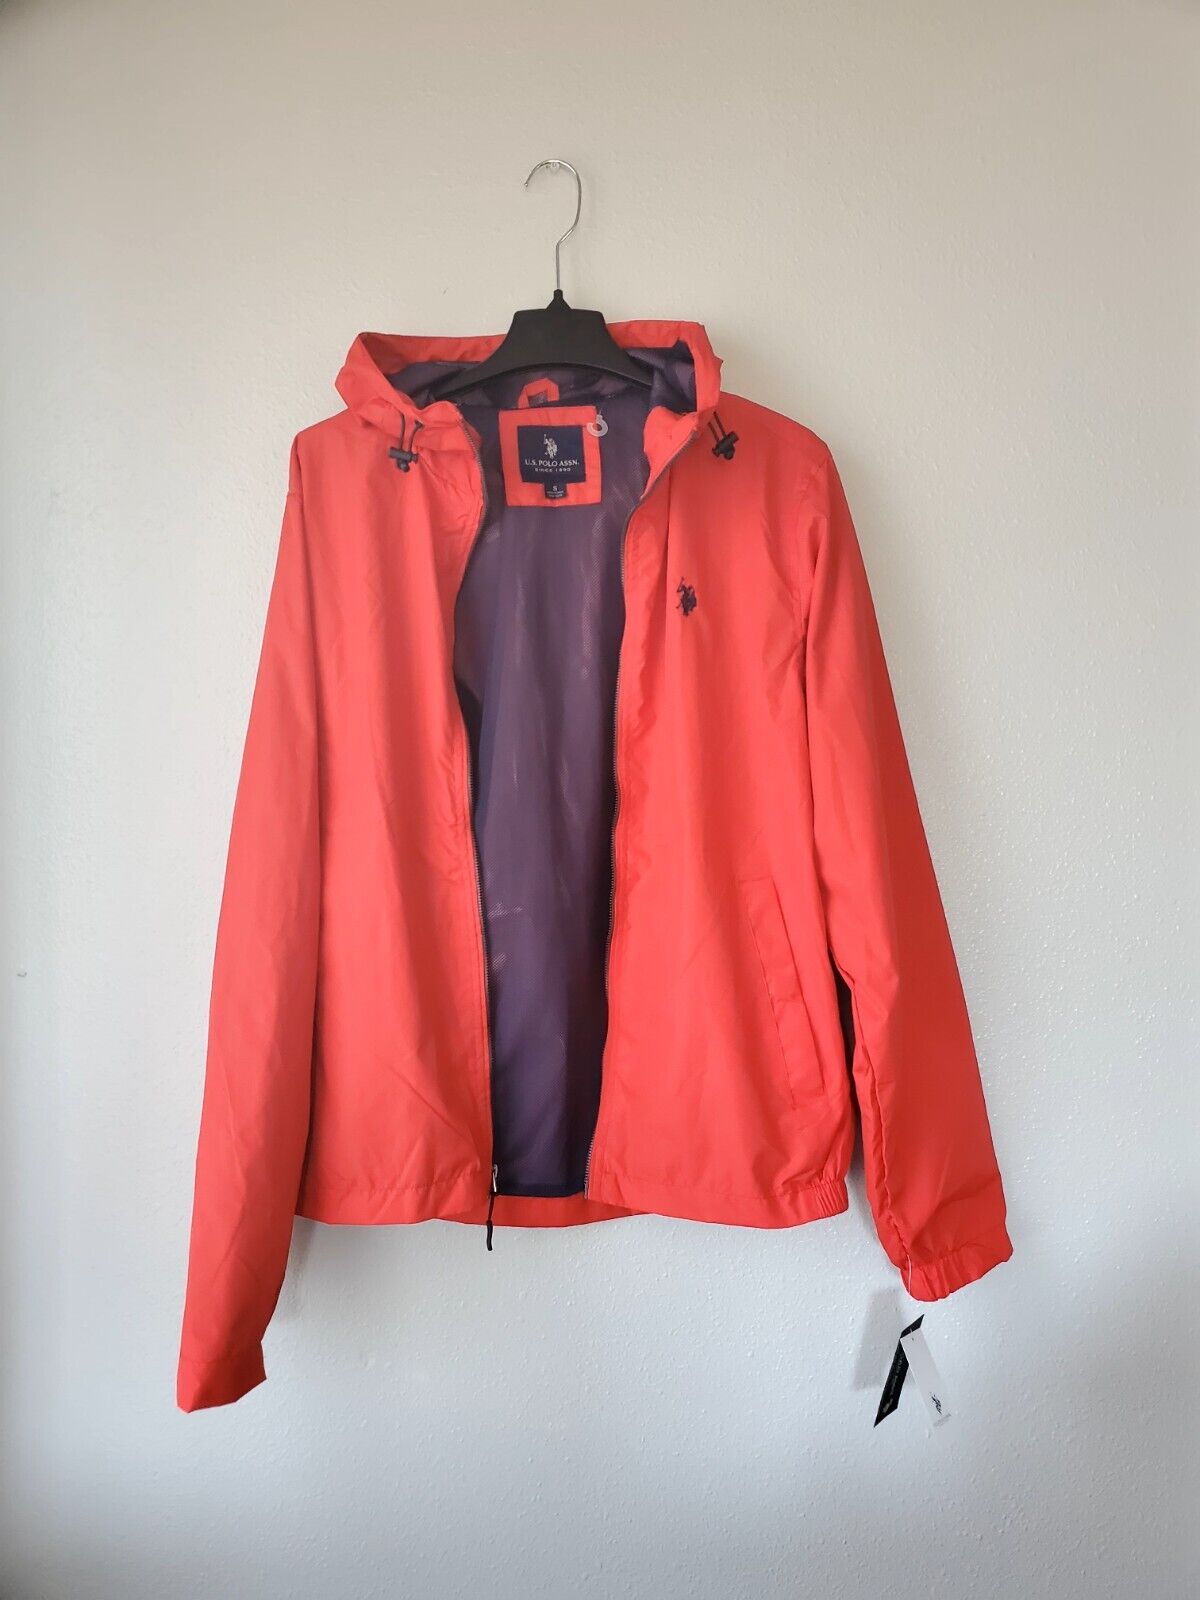 Uspa Men's Red Wind Resistant Rain Jacket Size Large New 109626p2